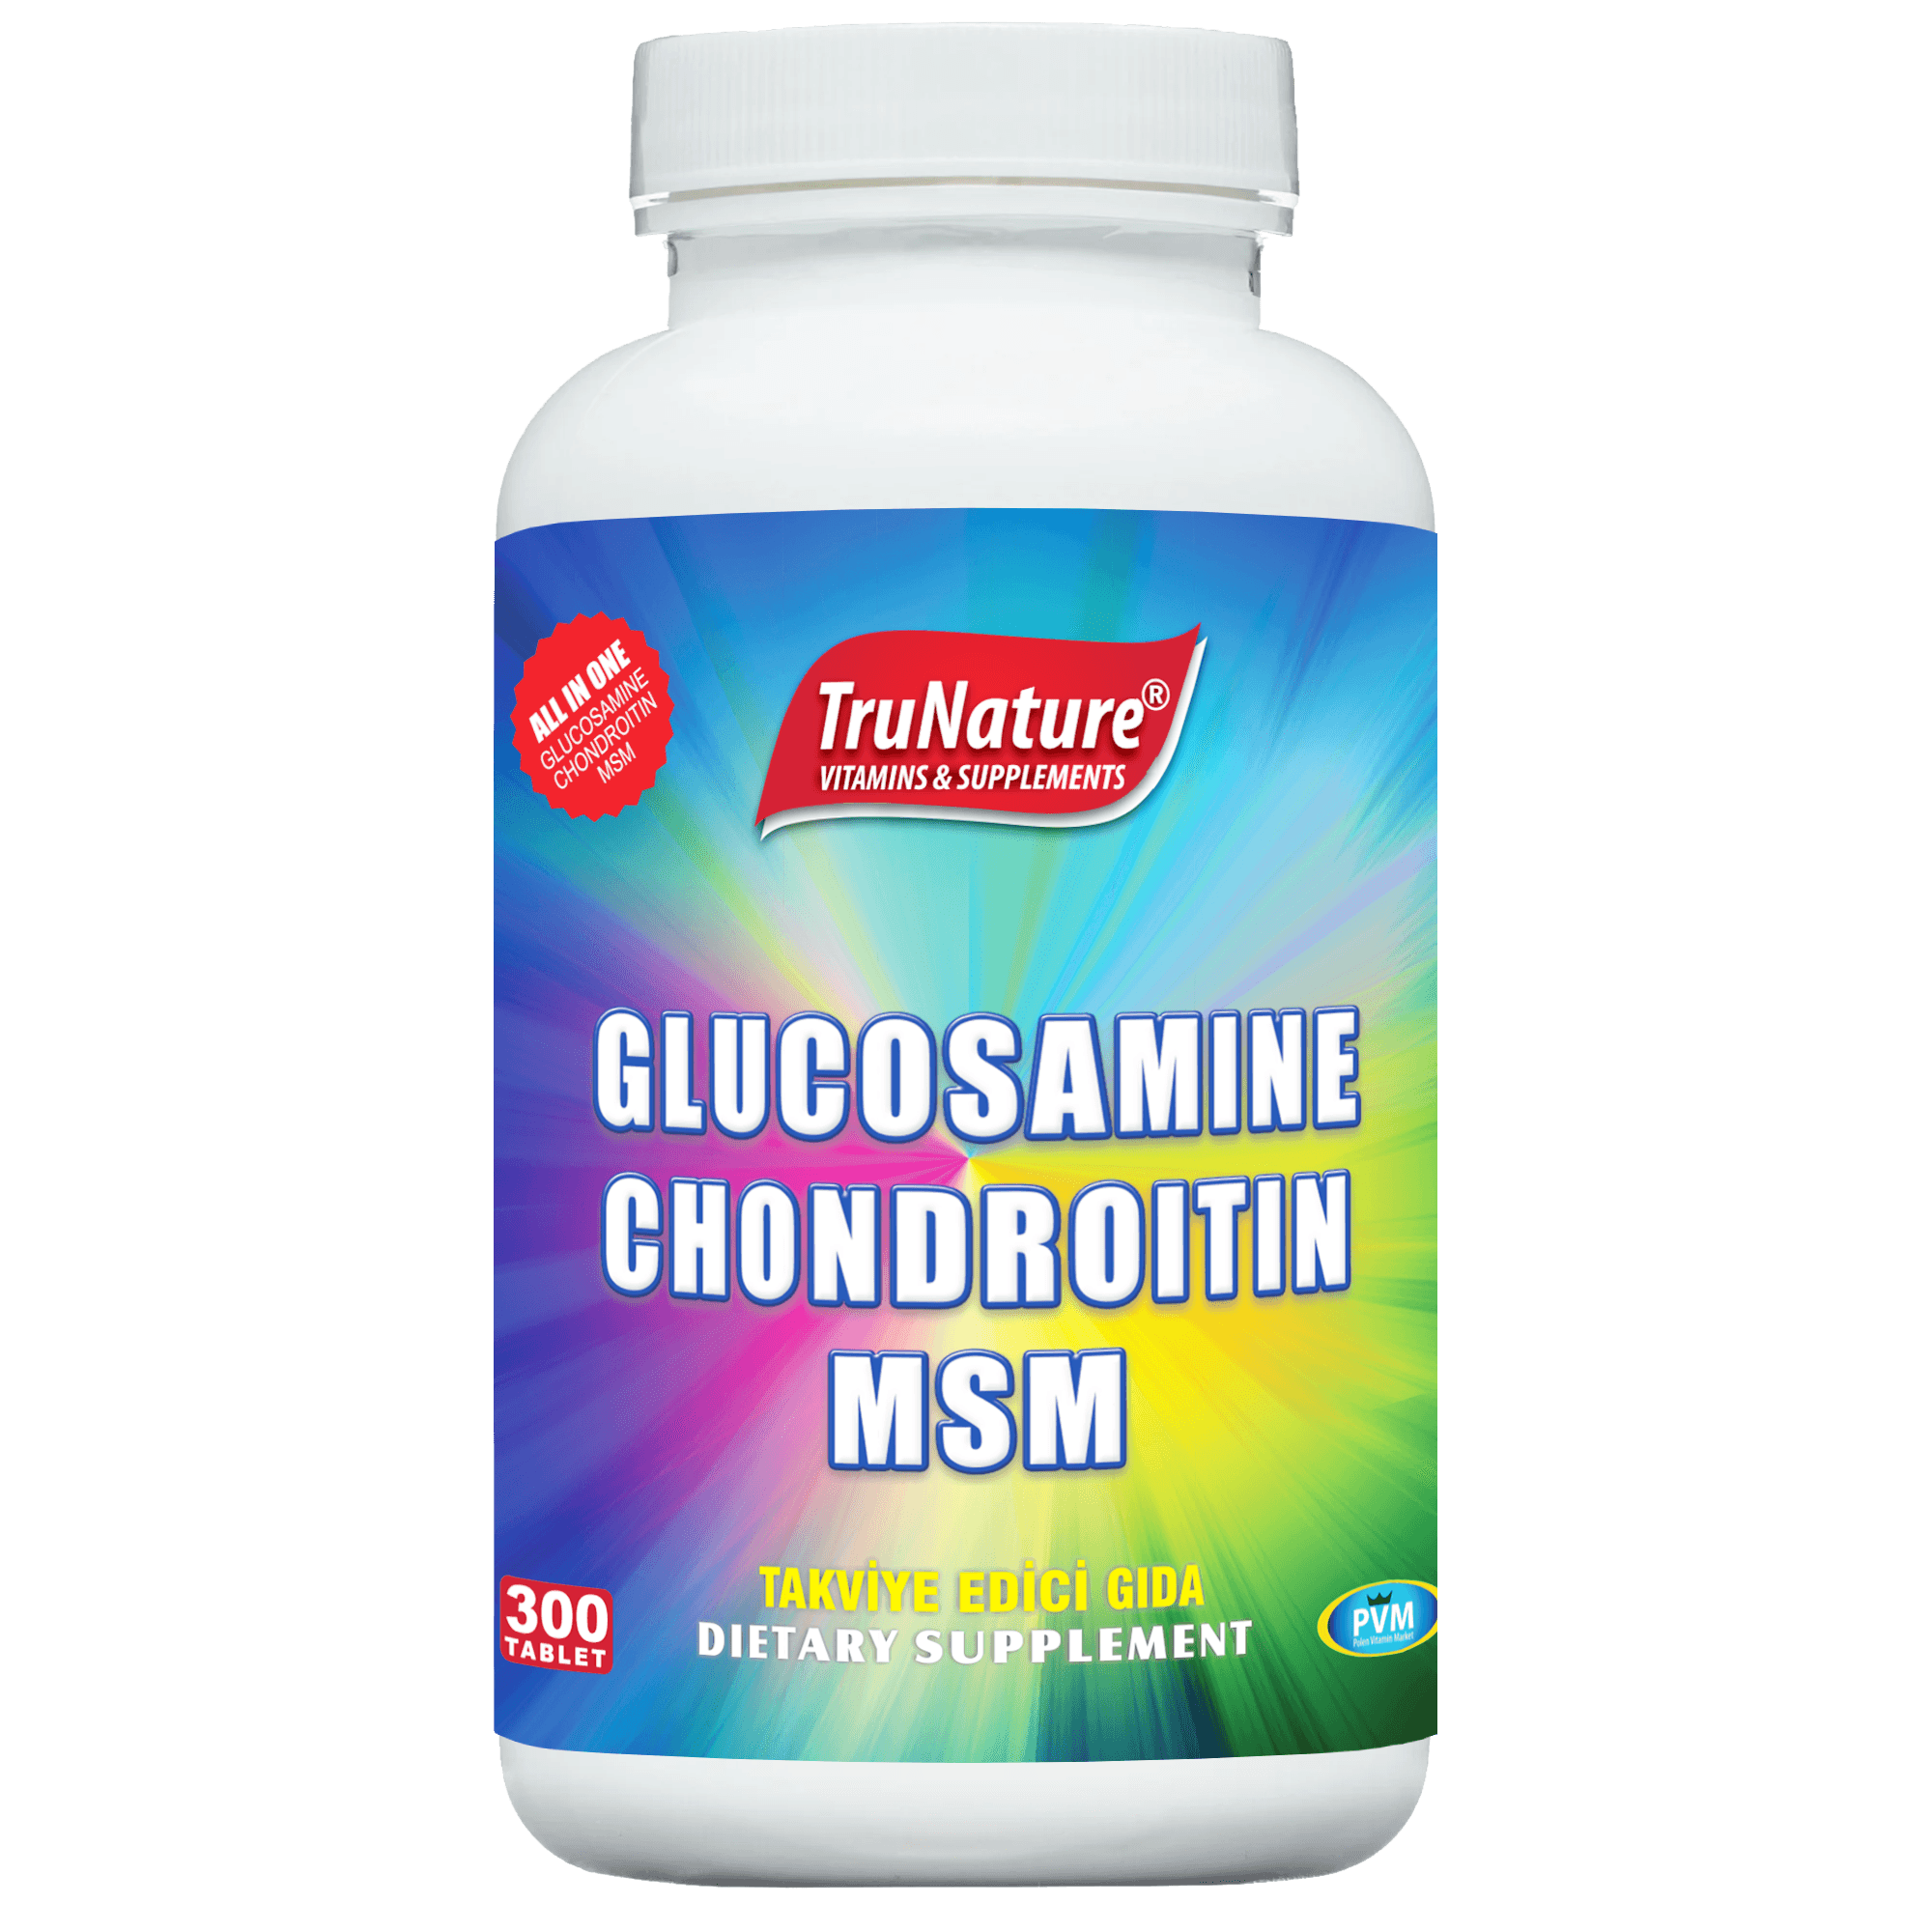 GLUCOSAMINE CHONROITIN MSM 300 TABLET